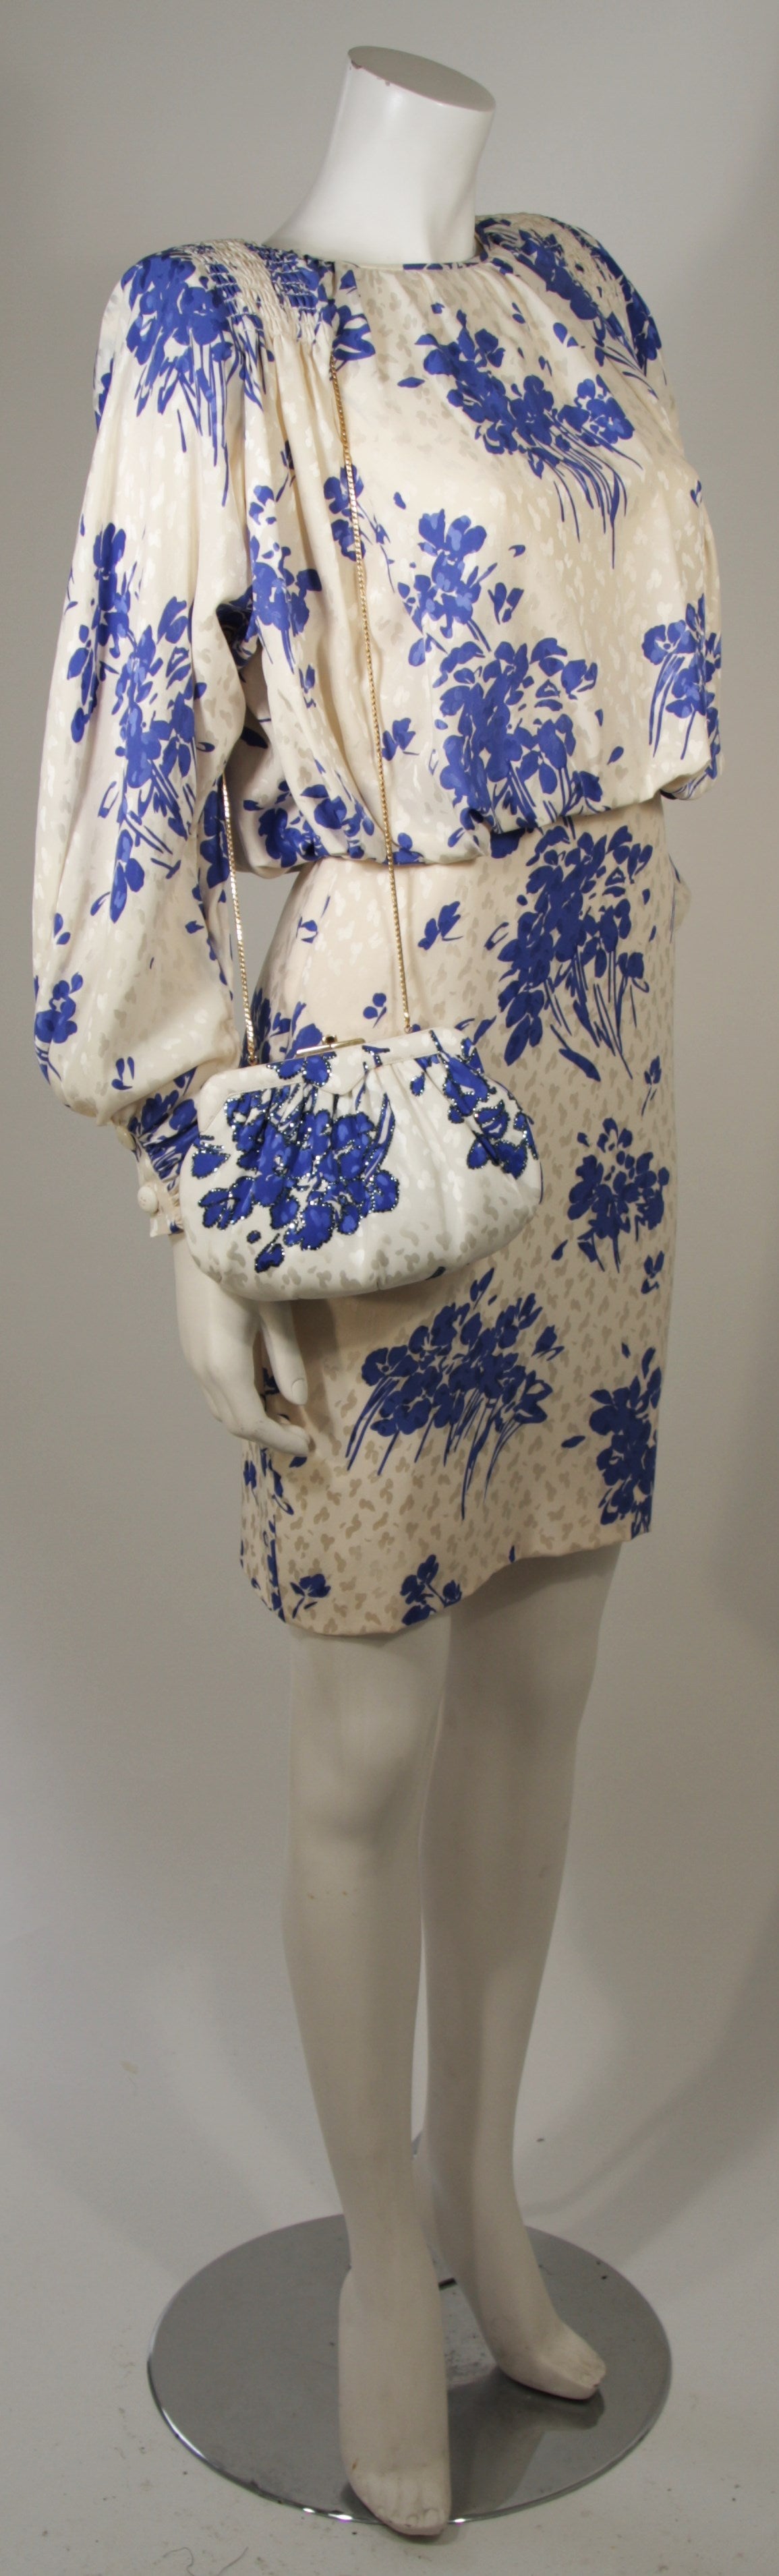 Women's Galanos Silk Dress with Matching Embellished Judith Leiber Purse Size 2-4